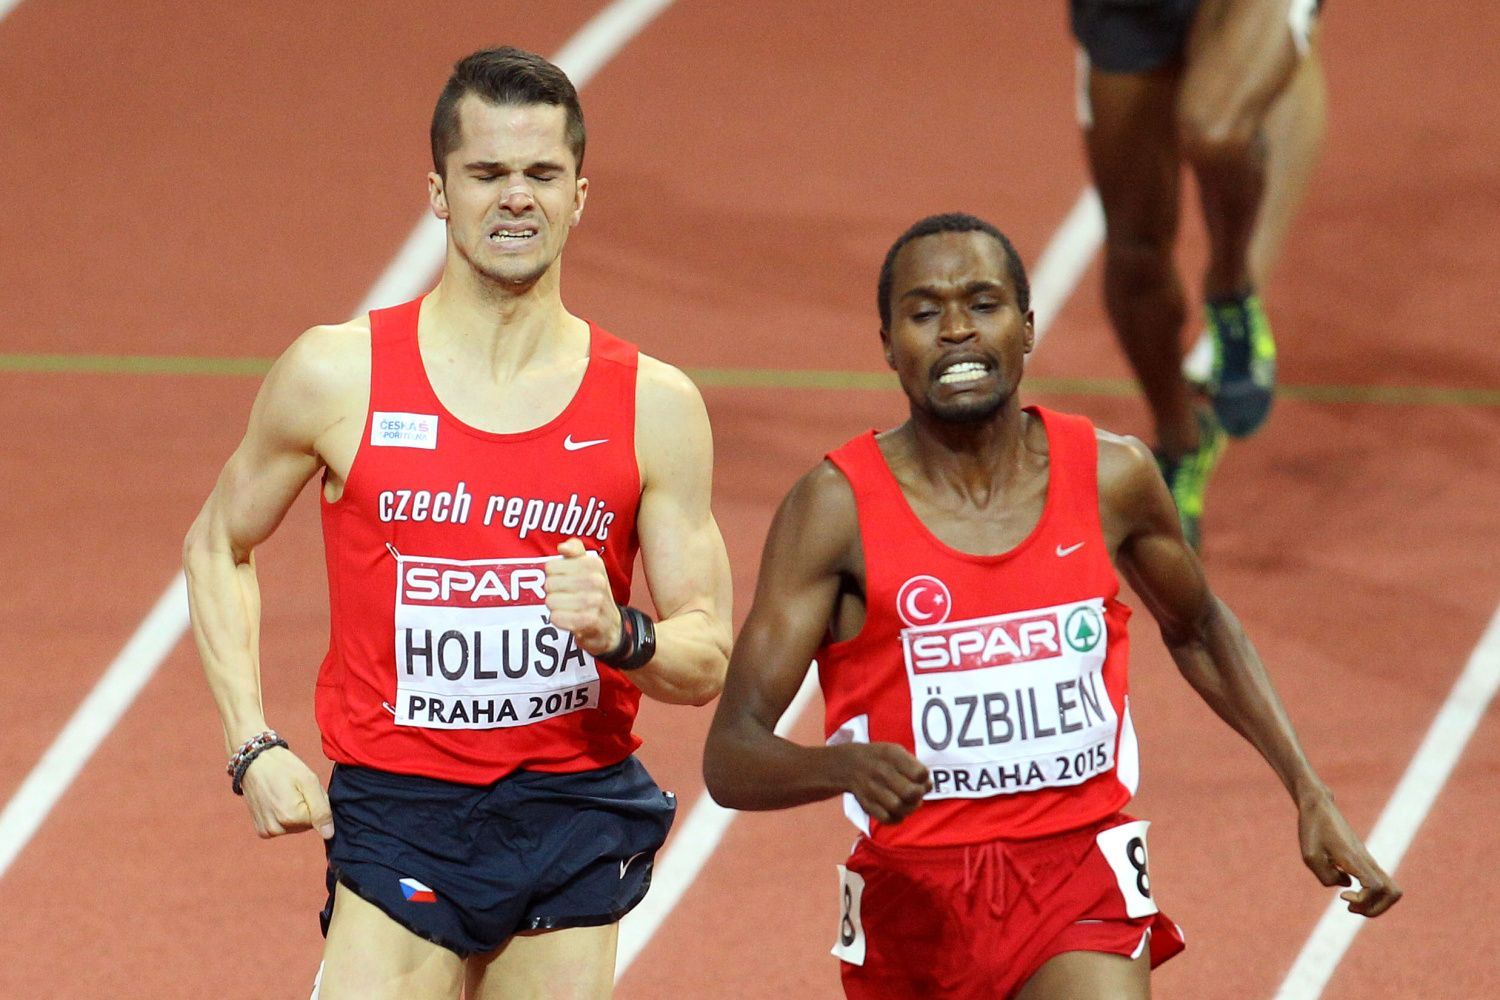 HME v atletice Praha 2015: Jakub Holuša a Tanui Ilham Özbilen (1500 m)